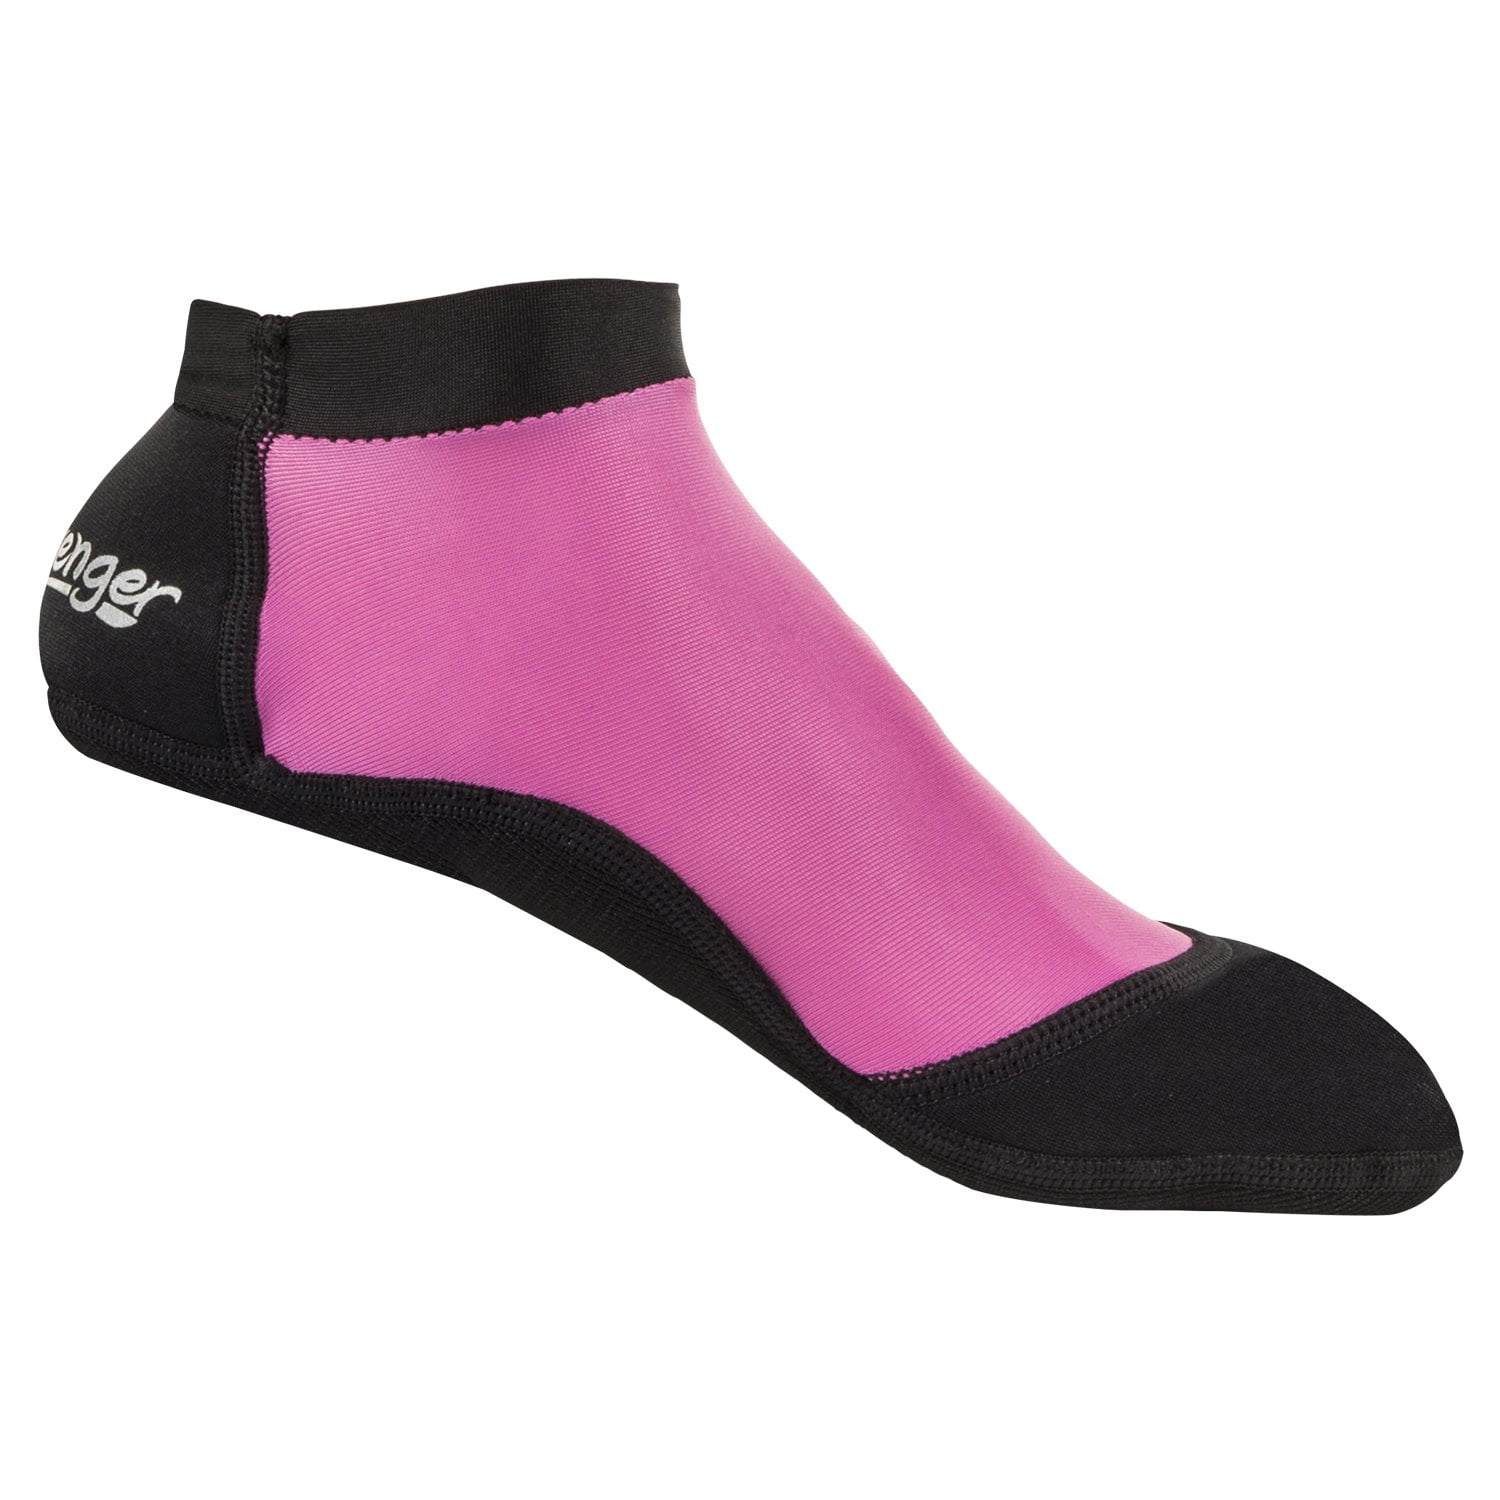 Seavenger SeaSnug Low Cut Love Cute Pink Water Sports Volleyball Beach Socks 